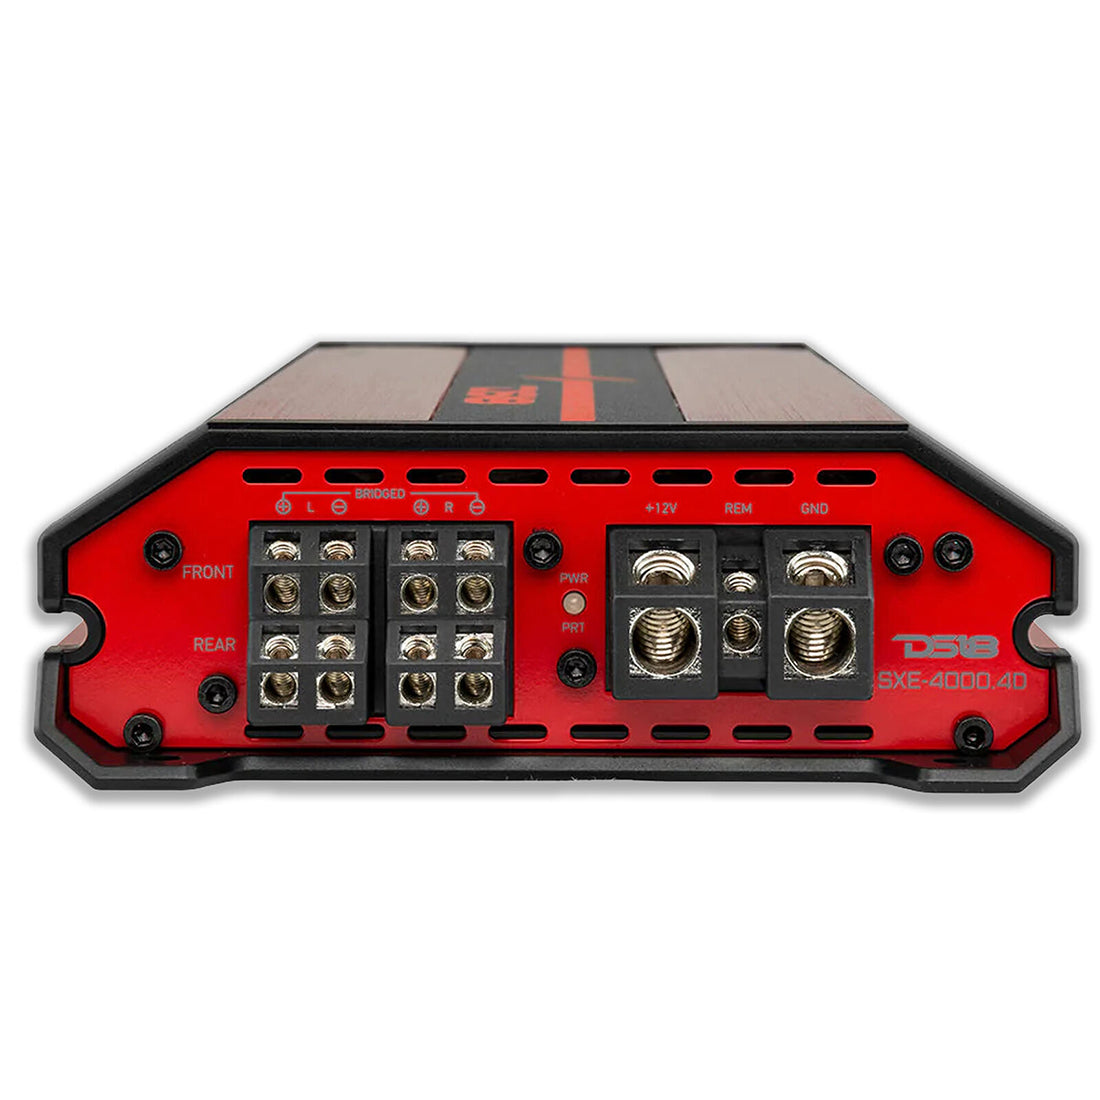 DS18 SXE-4000.4D/RD 4000W Peak 4-Channel Class-D Full Range Car Amplifier (RED)